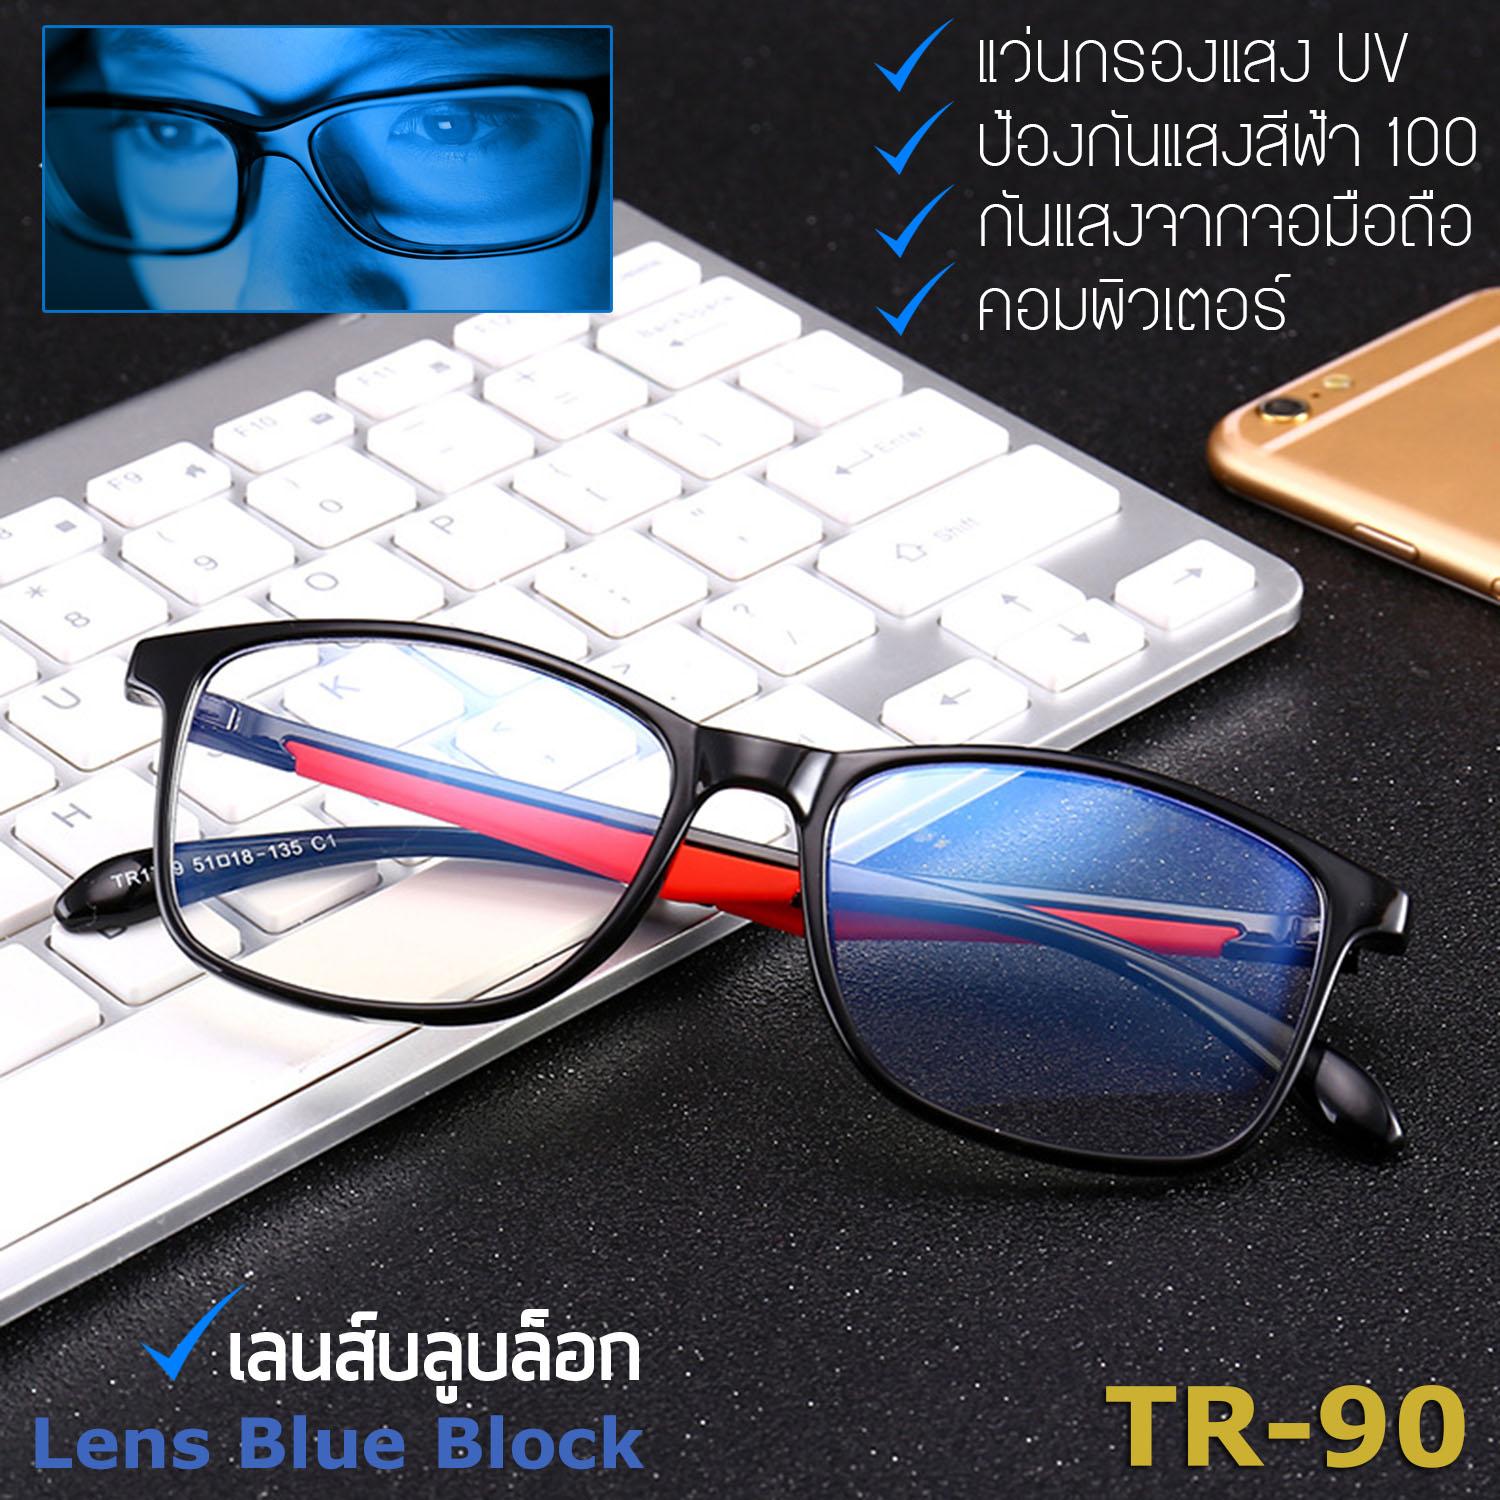 Blue Light กรองแสงคอมพิวเตอร์ มือถือ ป้องกันแสงสีฟ้า 100% แว่นตา เลนส์บลู รุ่น 1749 สไตล์เกาหลี กรอบแว่นตา เลนส์บลูบล็อก กรอบเต็ม ขาข้อต่อ วัสดุ TR90 ทีอาร์-90 น้ำหนักเบา ทนทาน Frame Eyeglass material Filter Blue Block Fashion Korea Eyewear Top Glasses